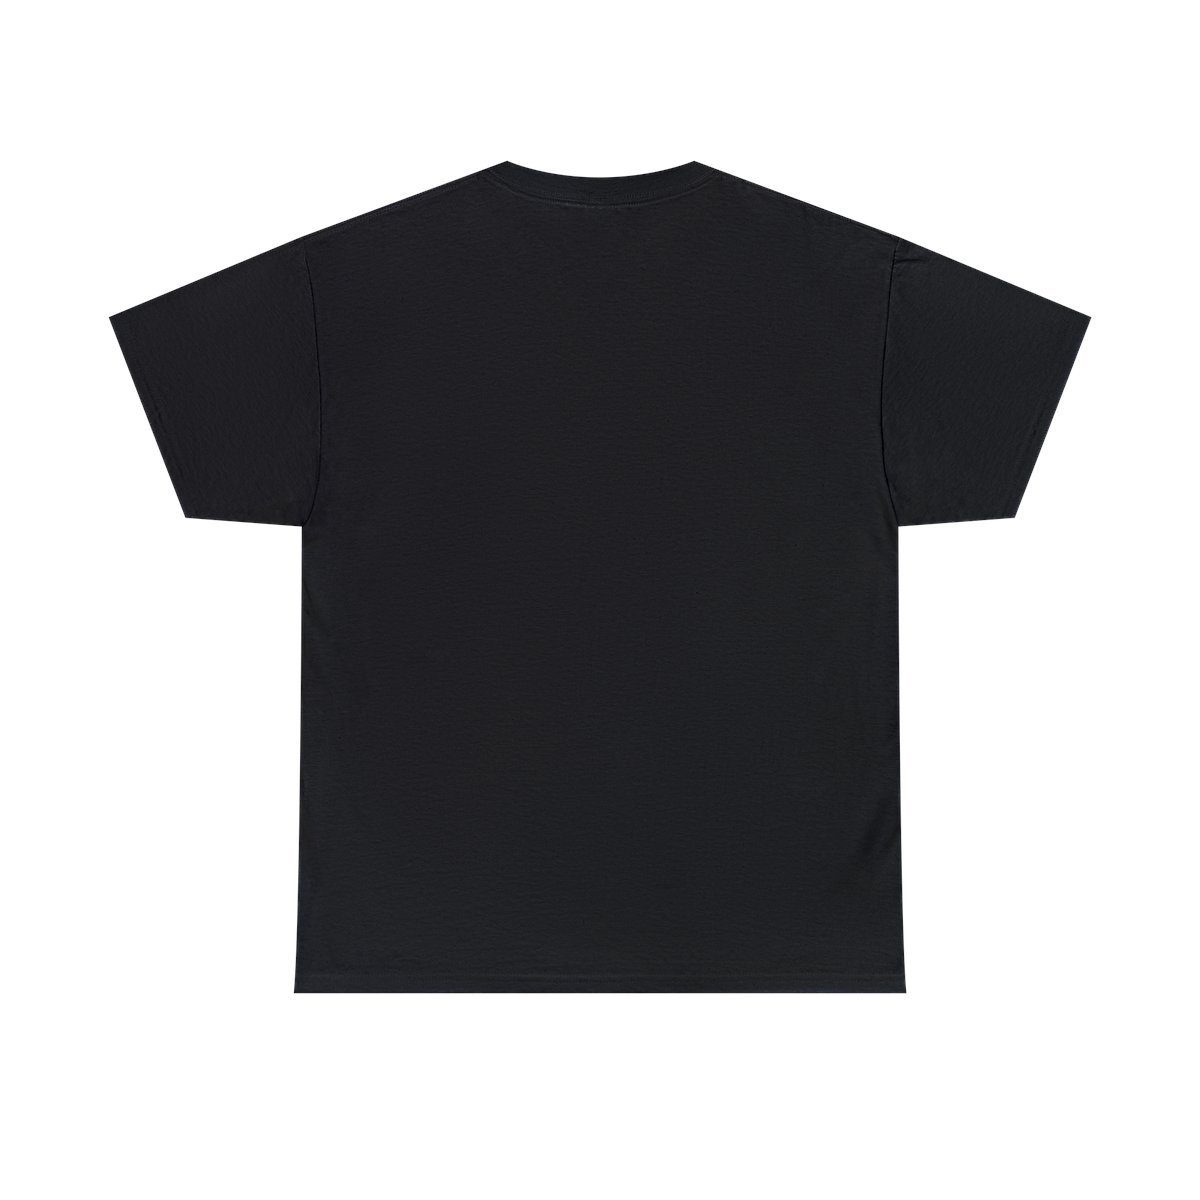 AfterWinter – Nebula Short Sleeve T-shirt